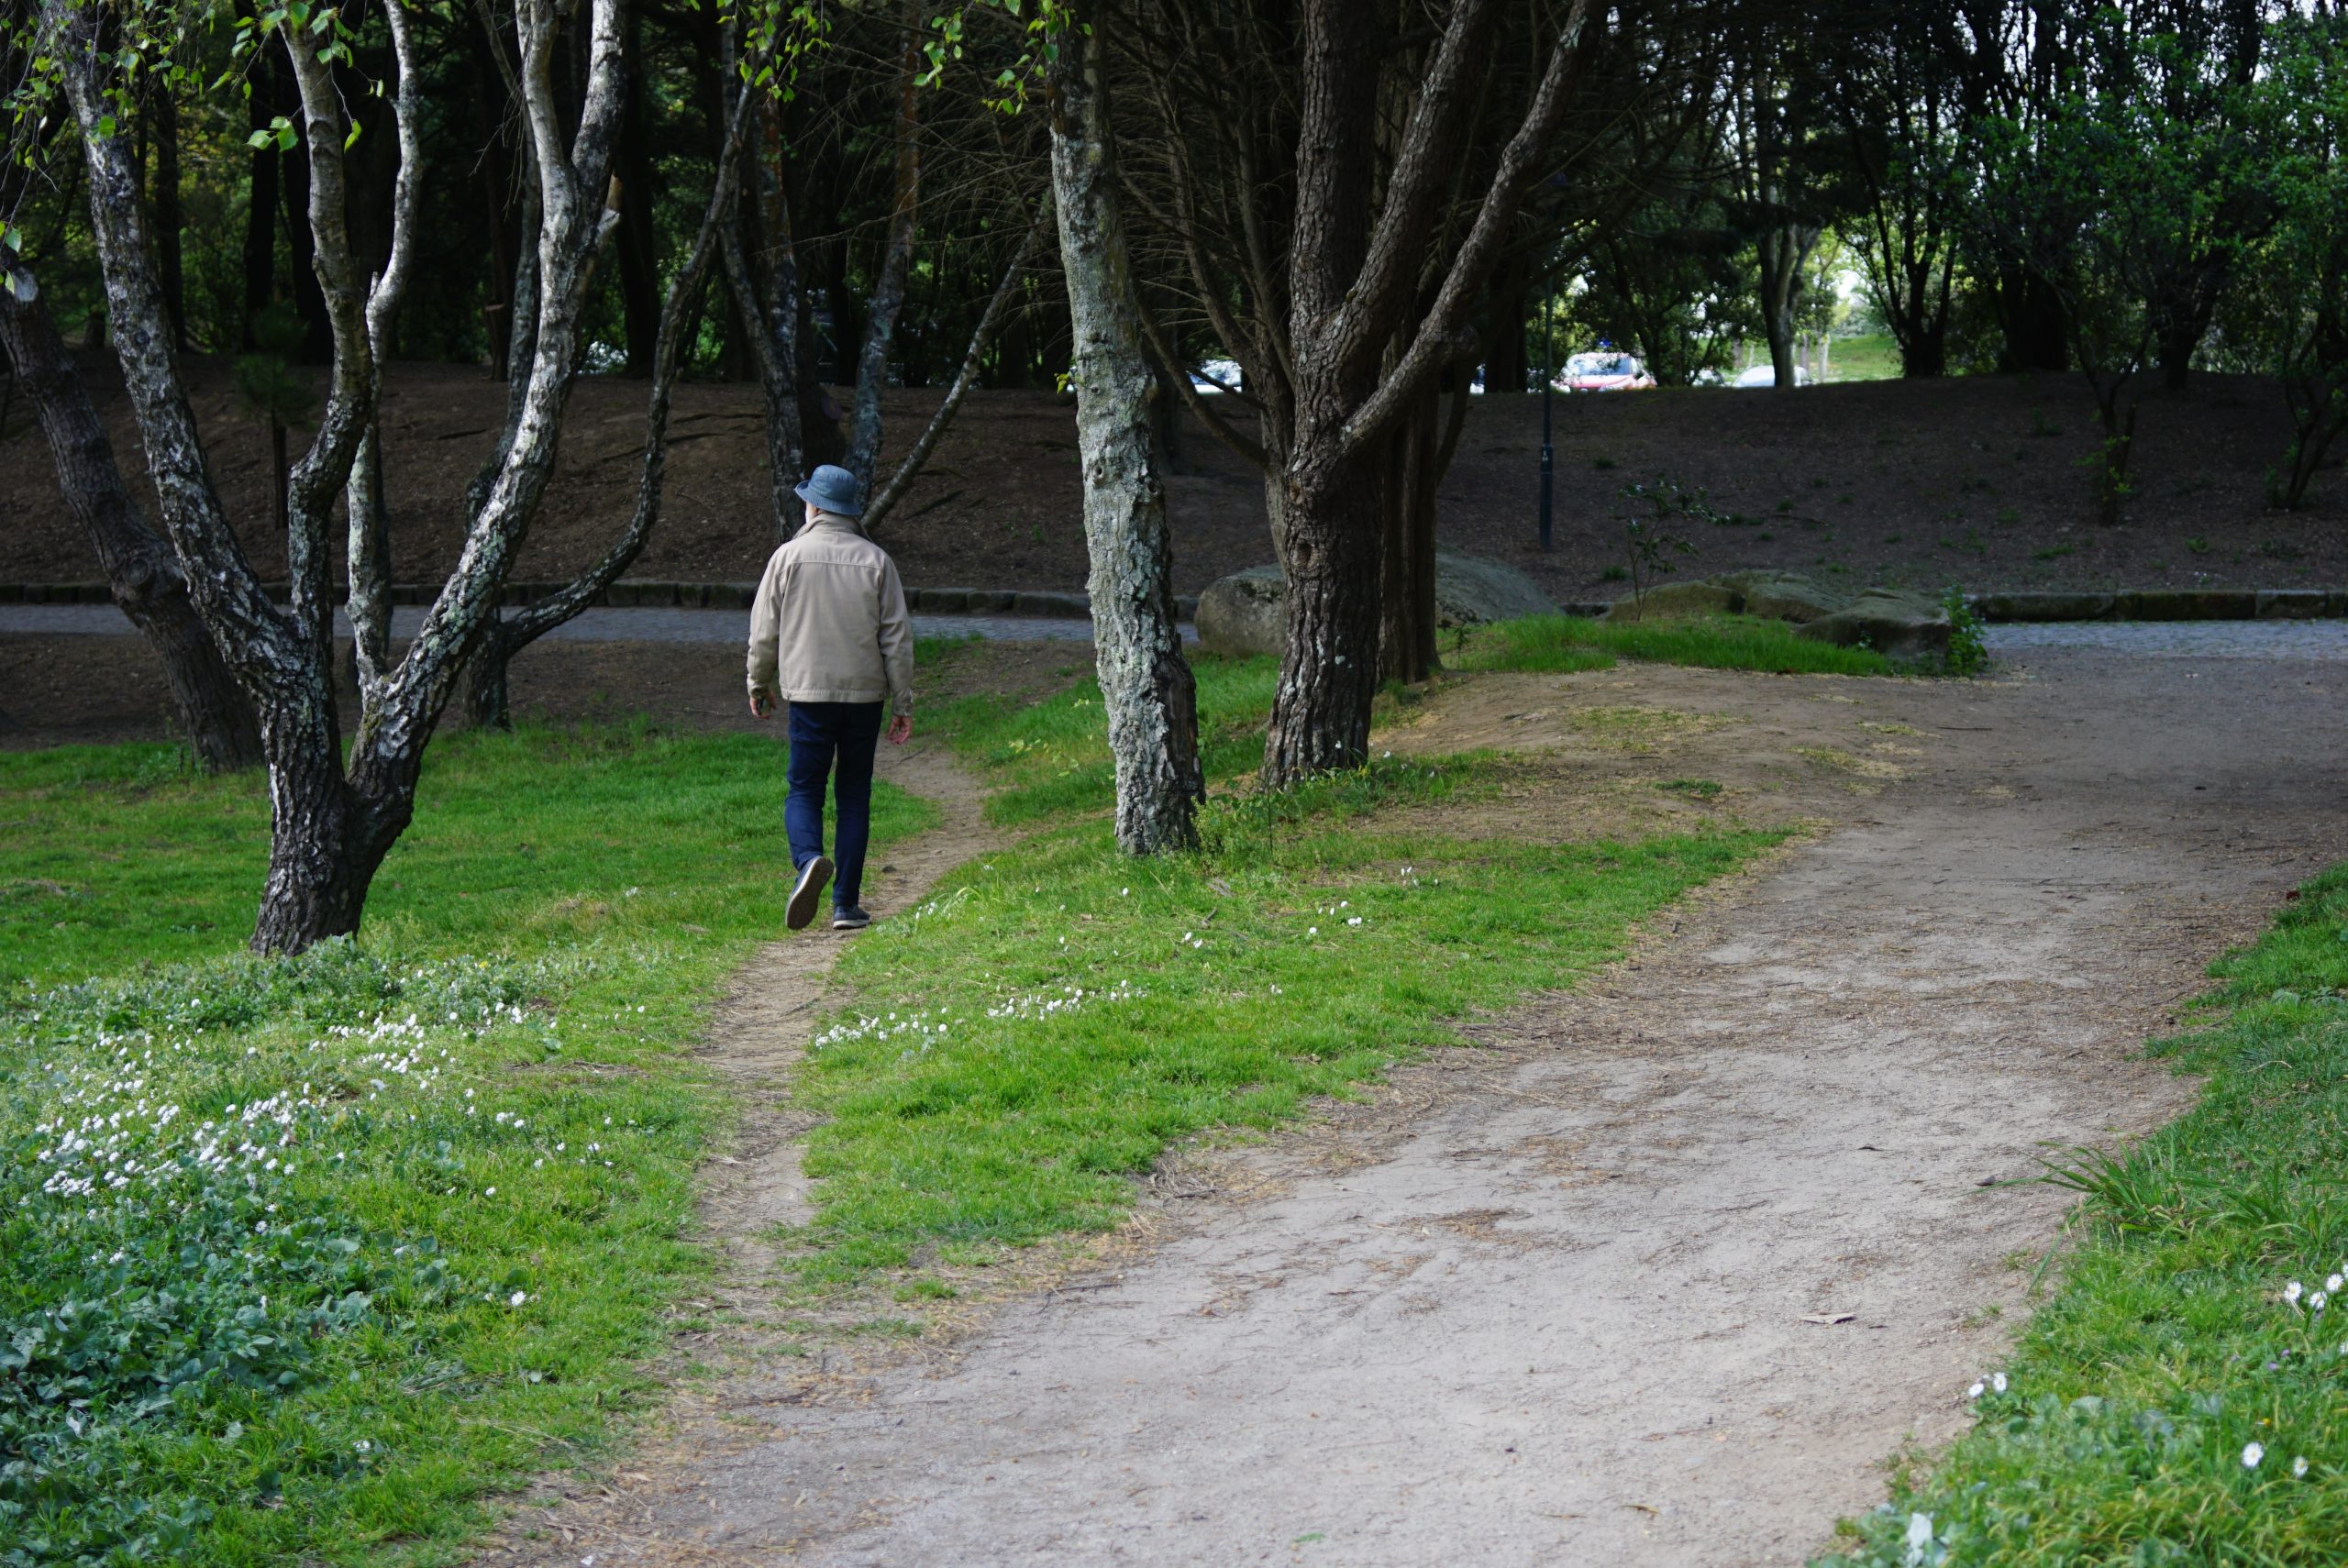 A man walking across a grass lawn, cutting across the paved walk ways.